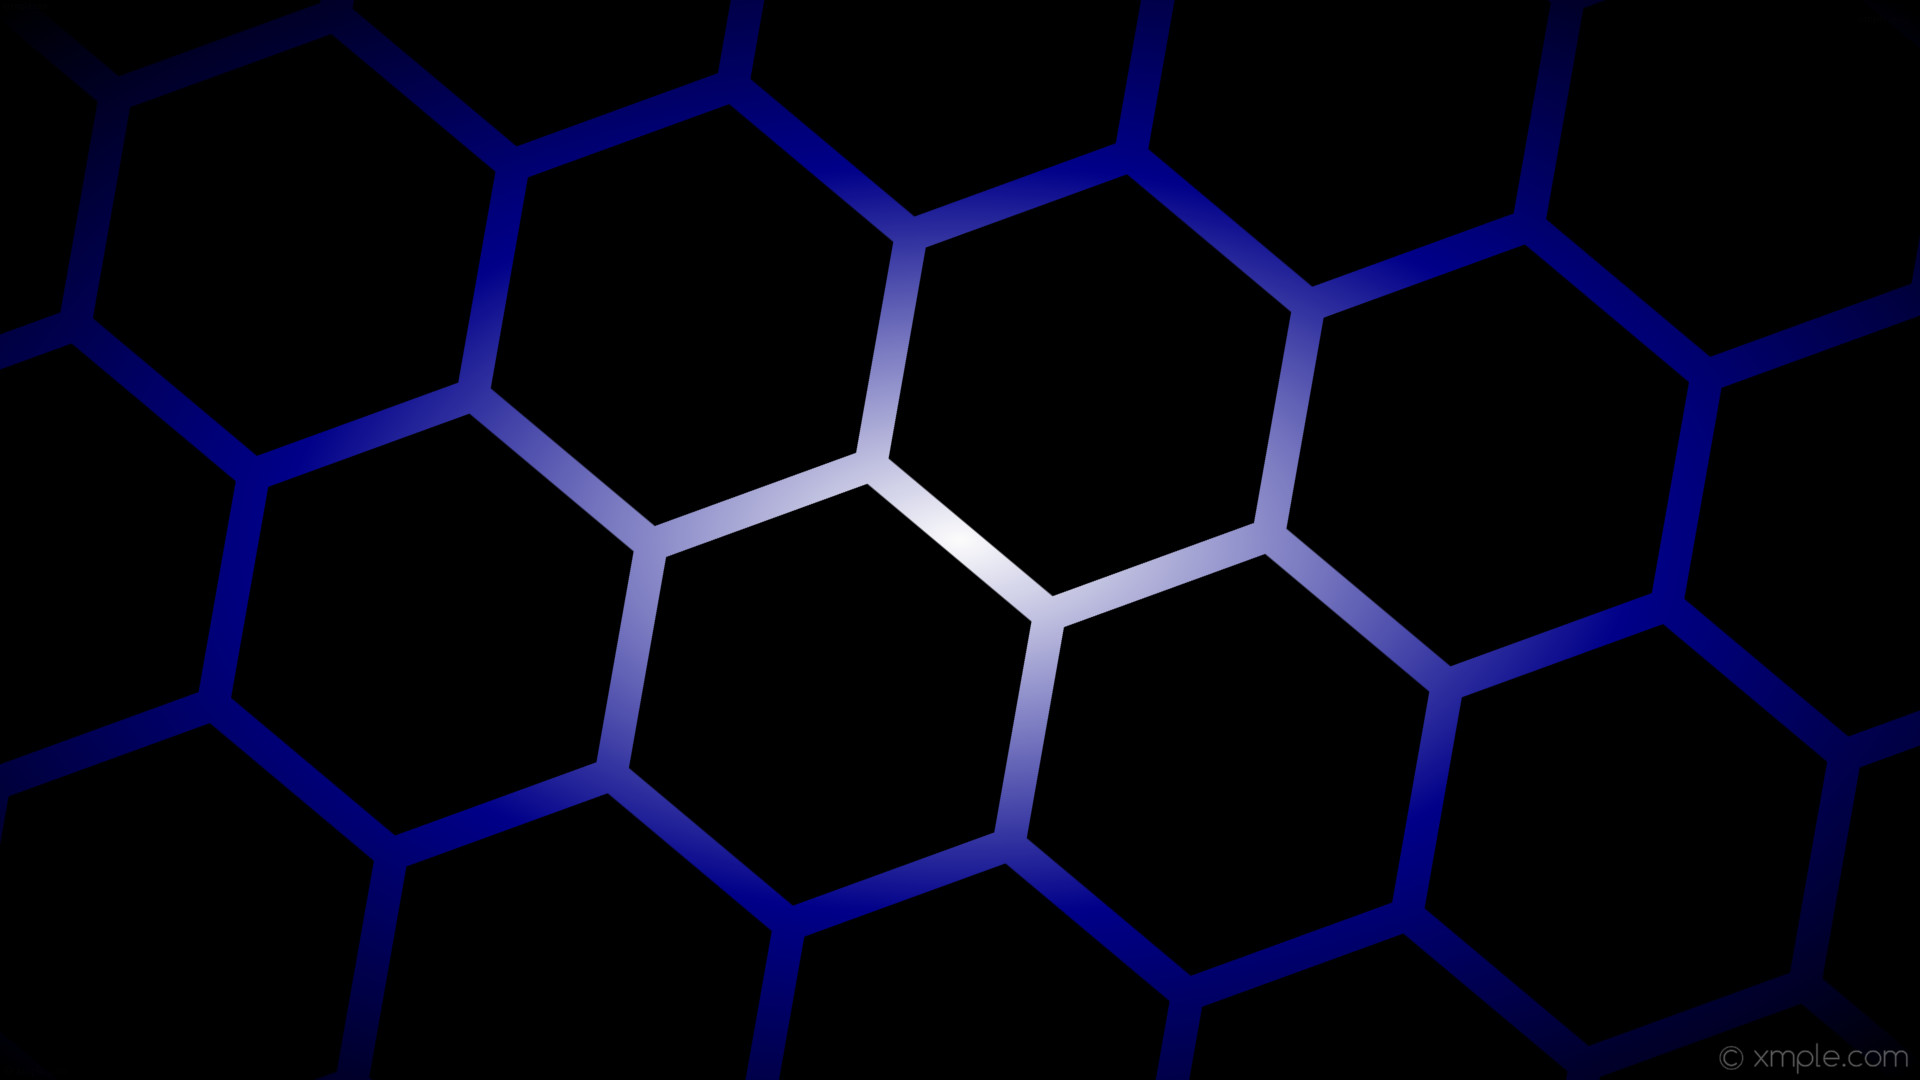 1920x1080 wallpaper blue glow hexagon gradient white black dark blue #000000 #ffffff  #00008b diagonal